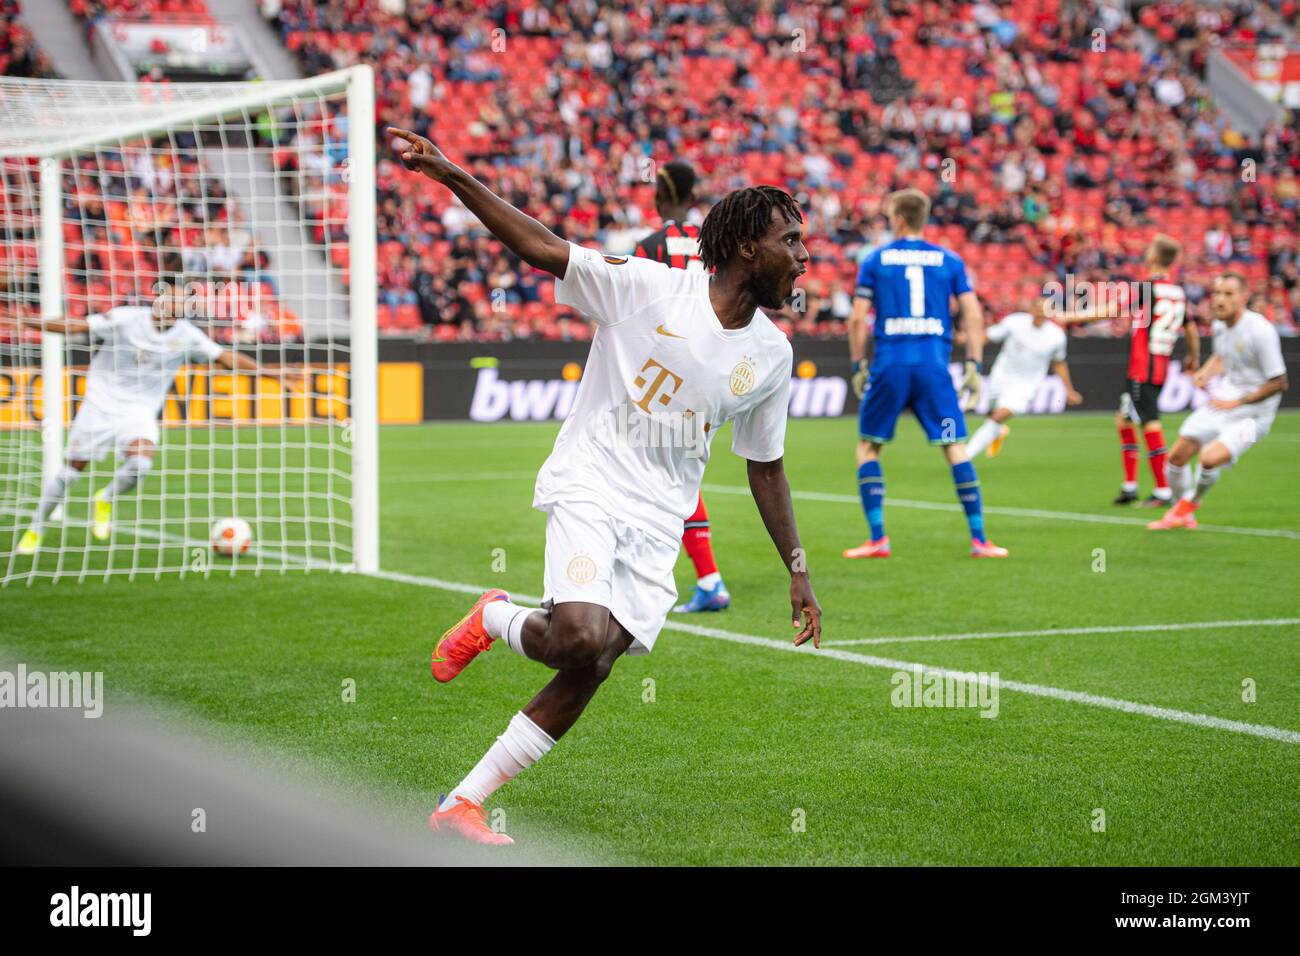 Tokmac Chol Nguen of Ferencvaros celebrates after scoring a goal News  Photo - Getty Images